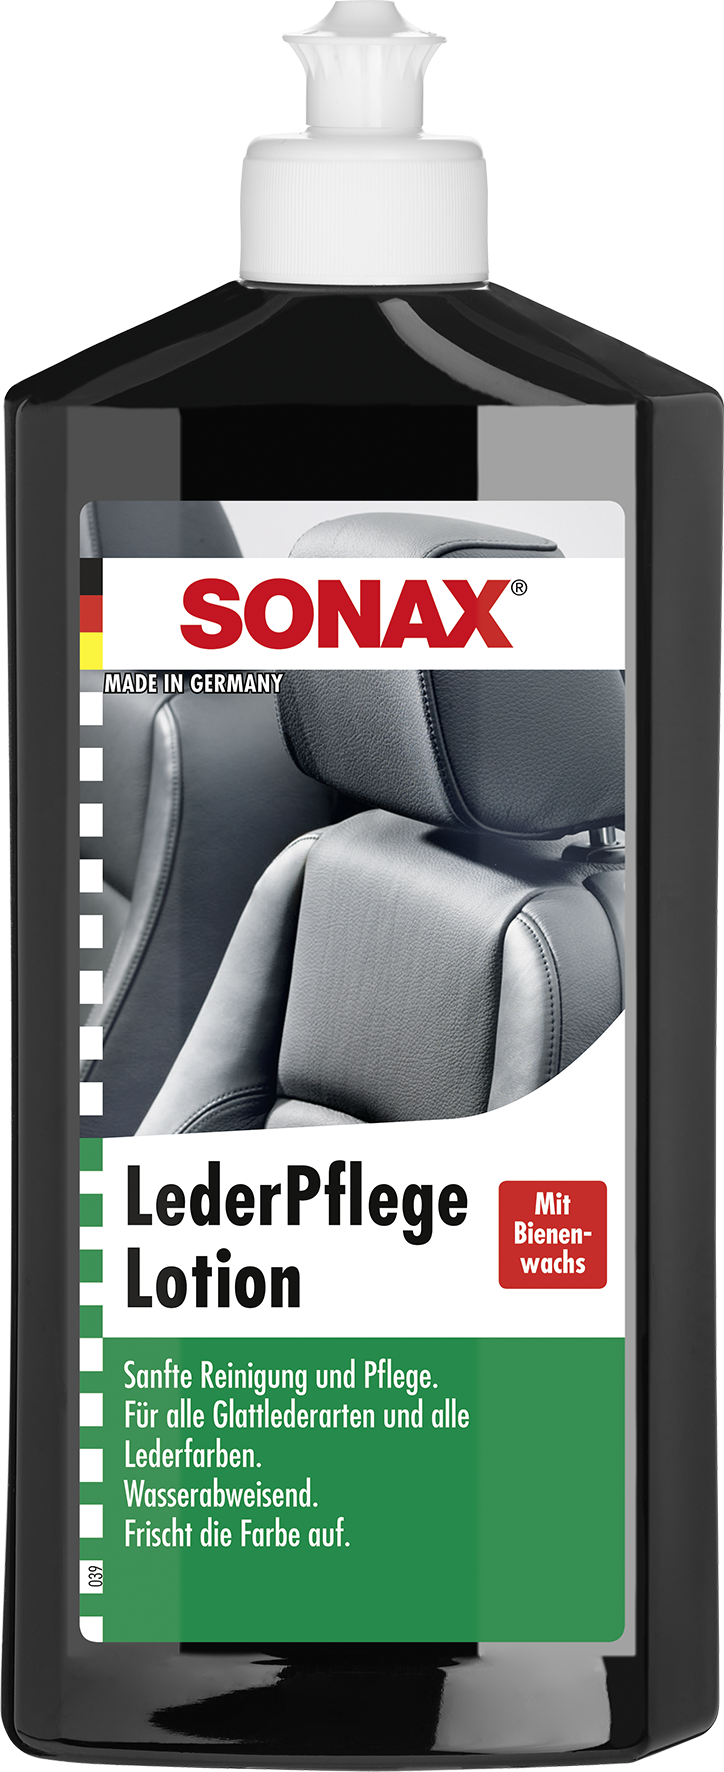 SONAX LederPflegeLotion 500ml - Weigola Hygienevertrieb -  - Weigola Hygienevertrieb